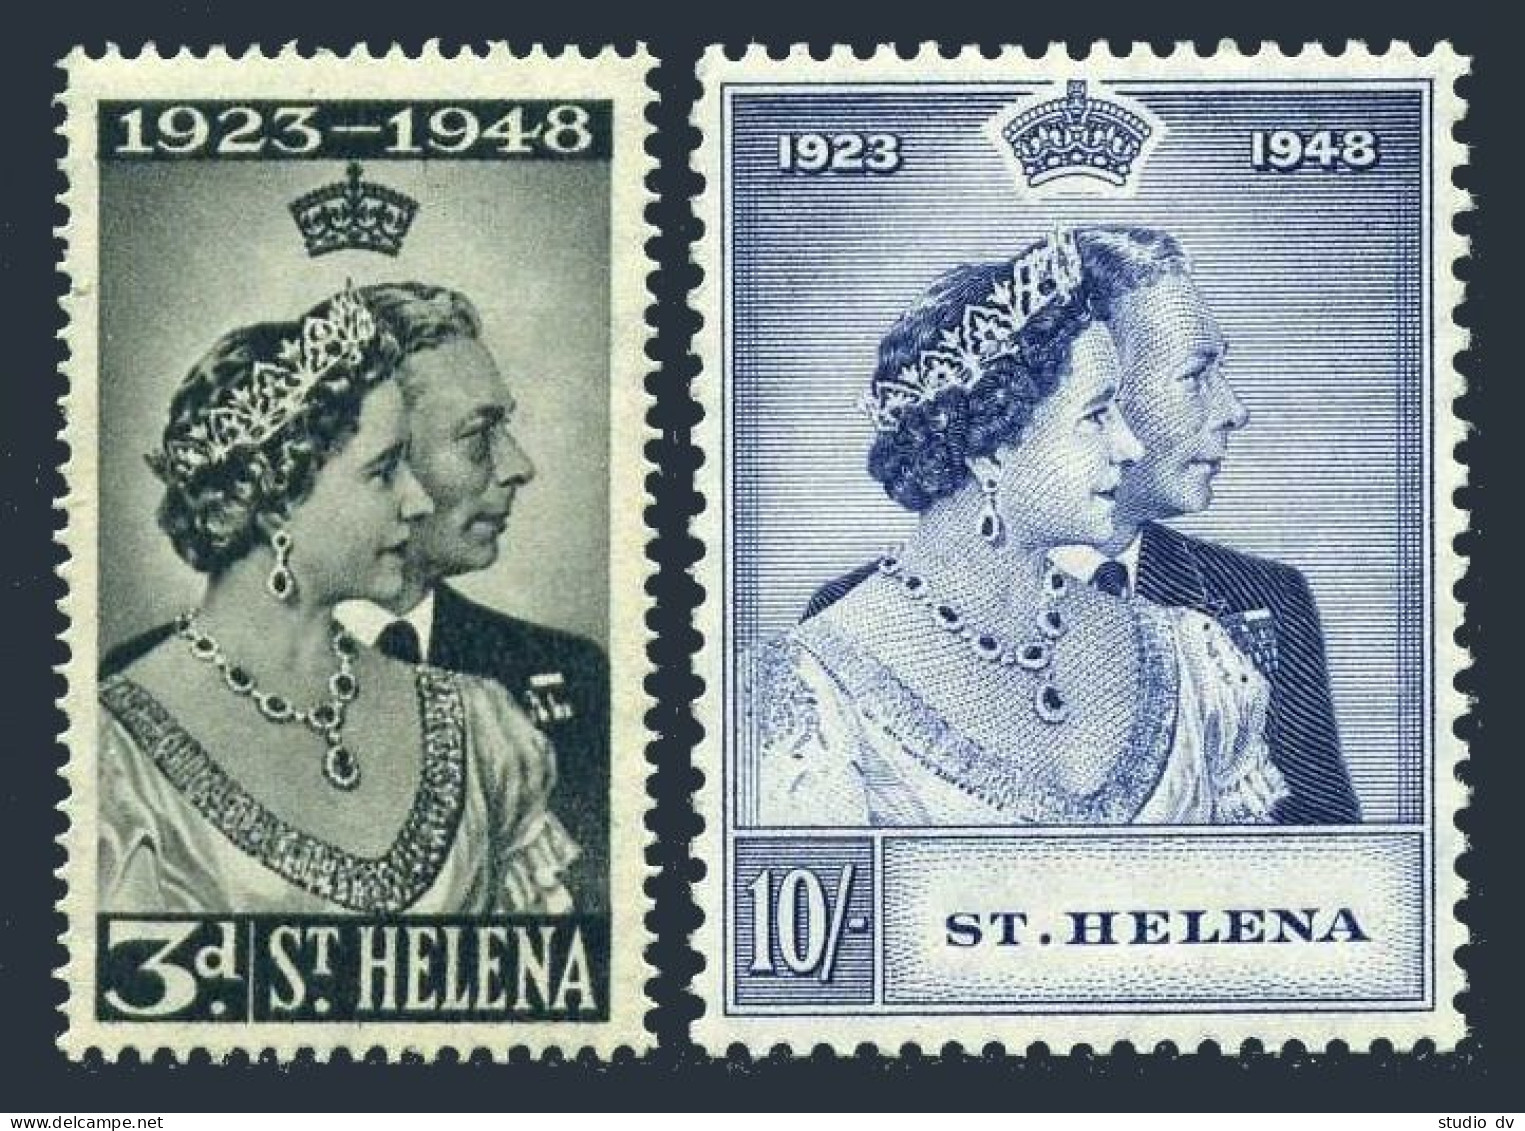 St Helena 130-131,hinged. Mi 113-114. Silver Wedding, 1948. George VI,Elizabeth. - Saint Helena Island